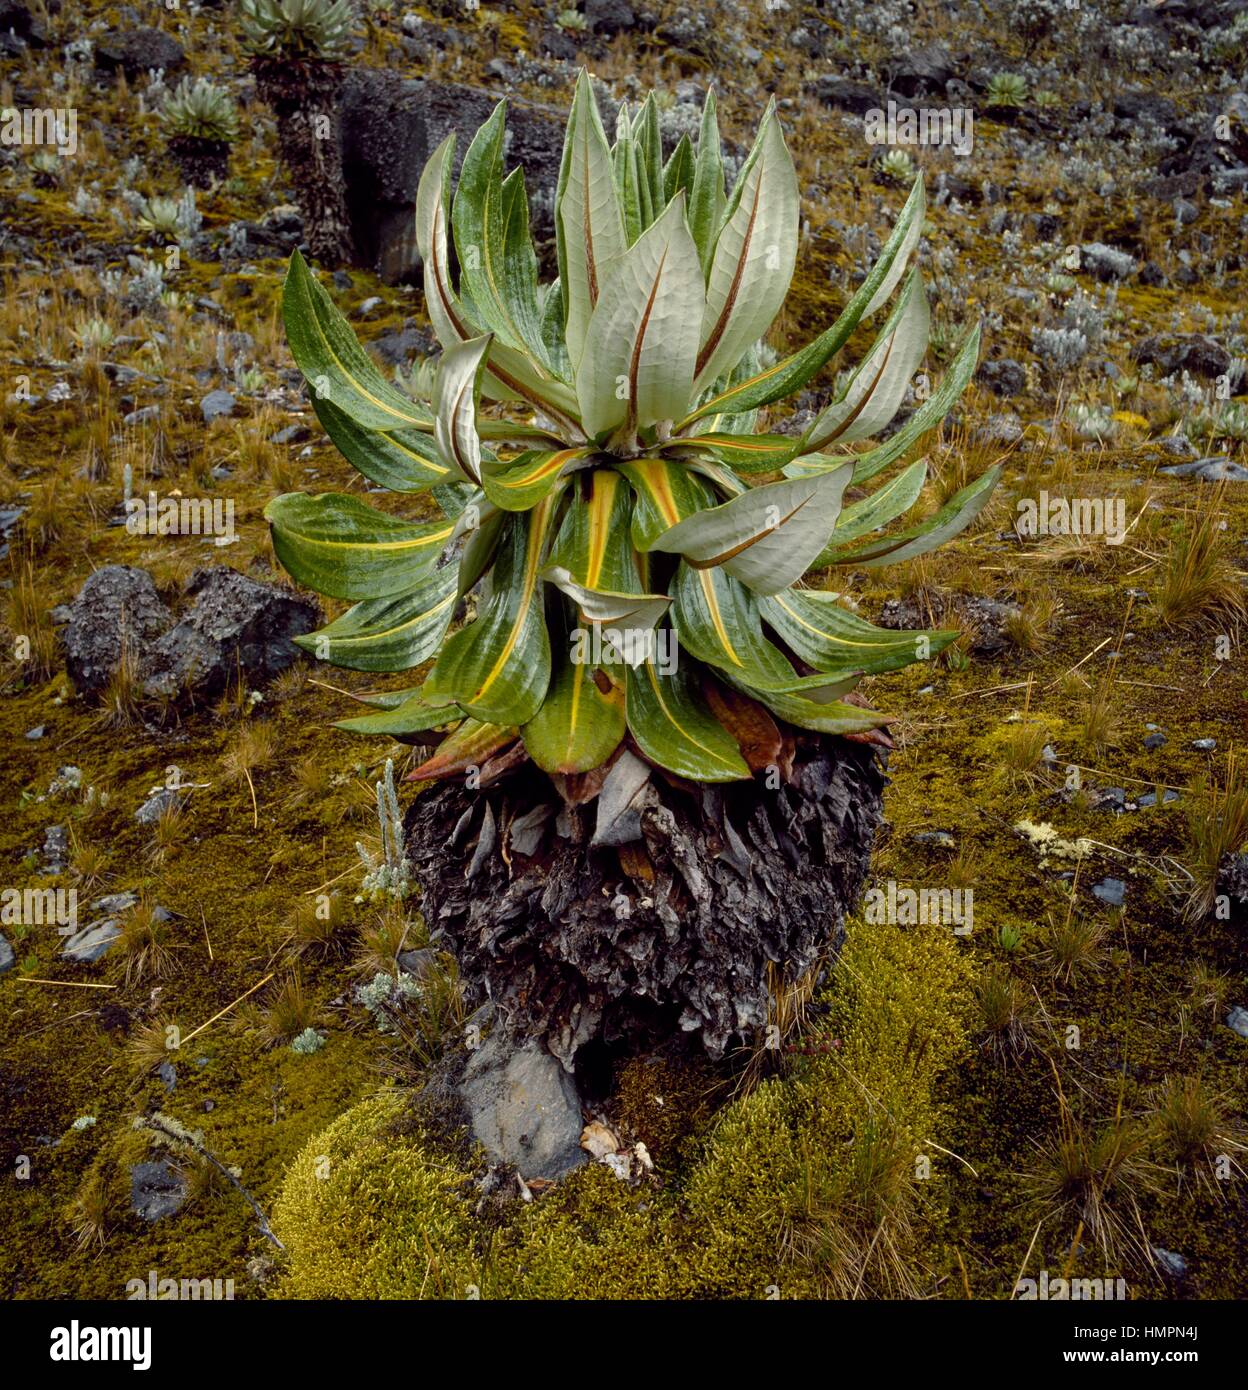 Groundsel or ragwort (Senecio sp), Asteraceae, Virunga National Park, Democratic Republic of the Congo. Stock Photo